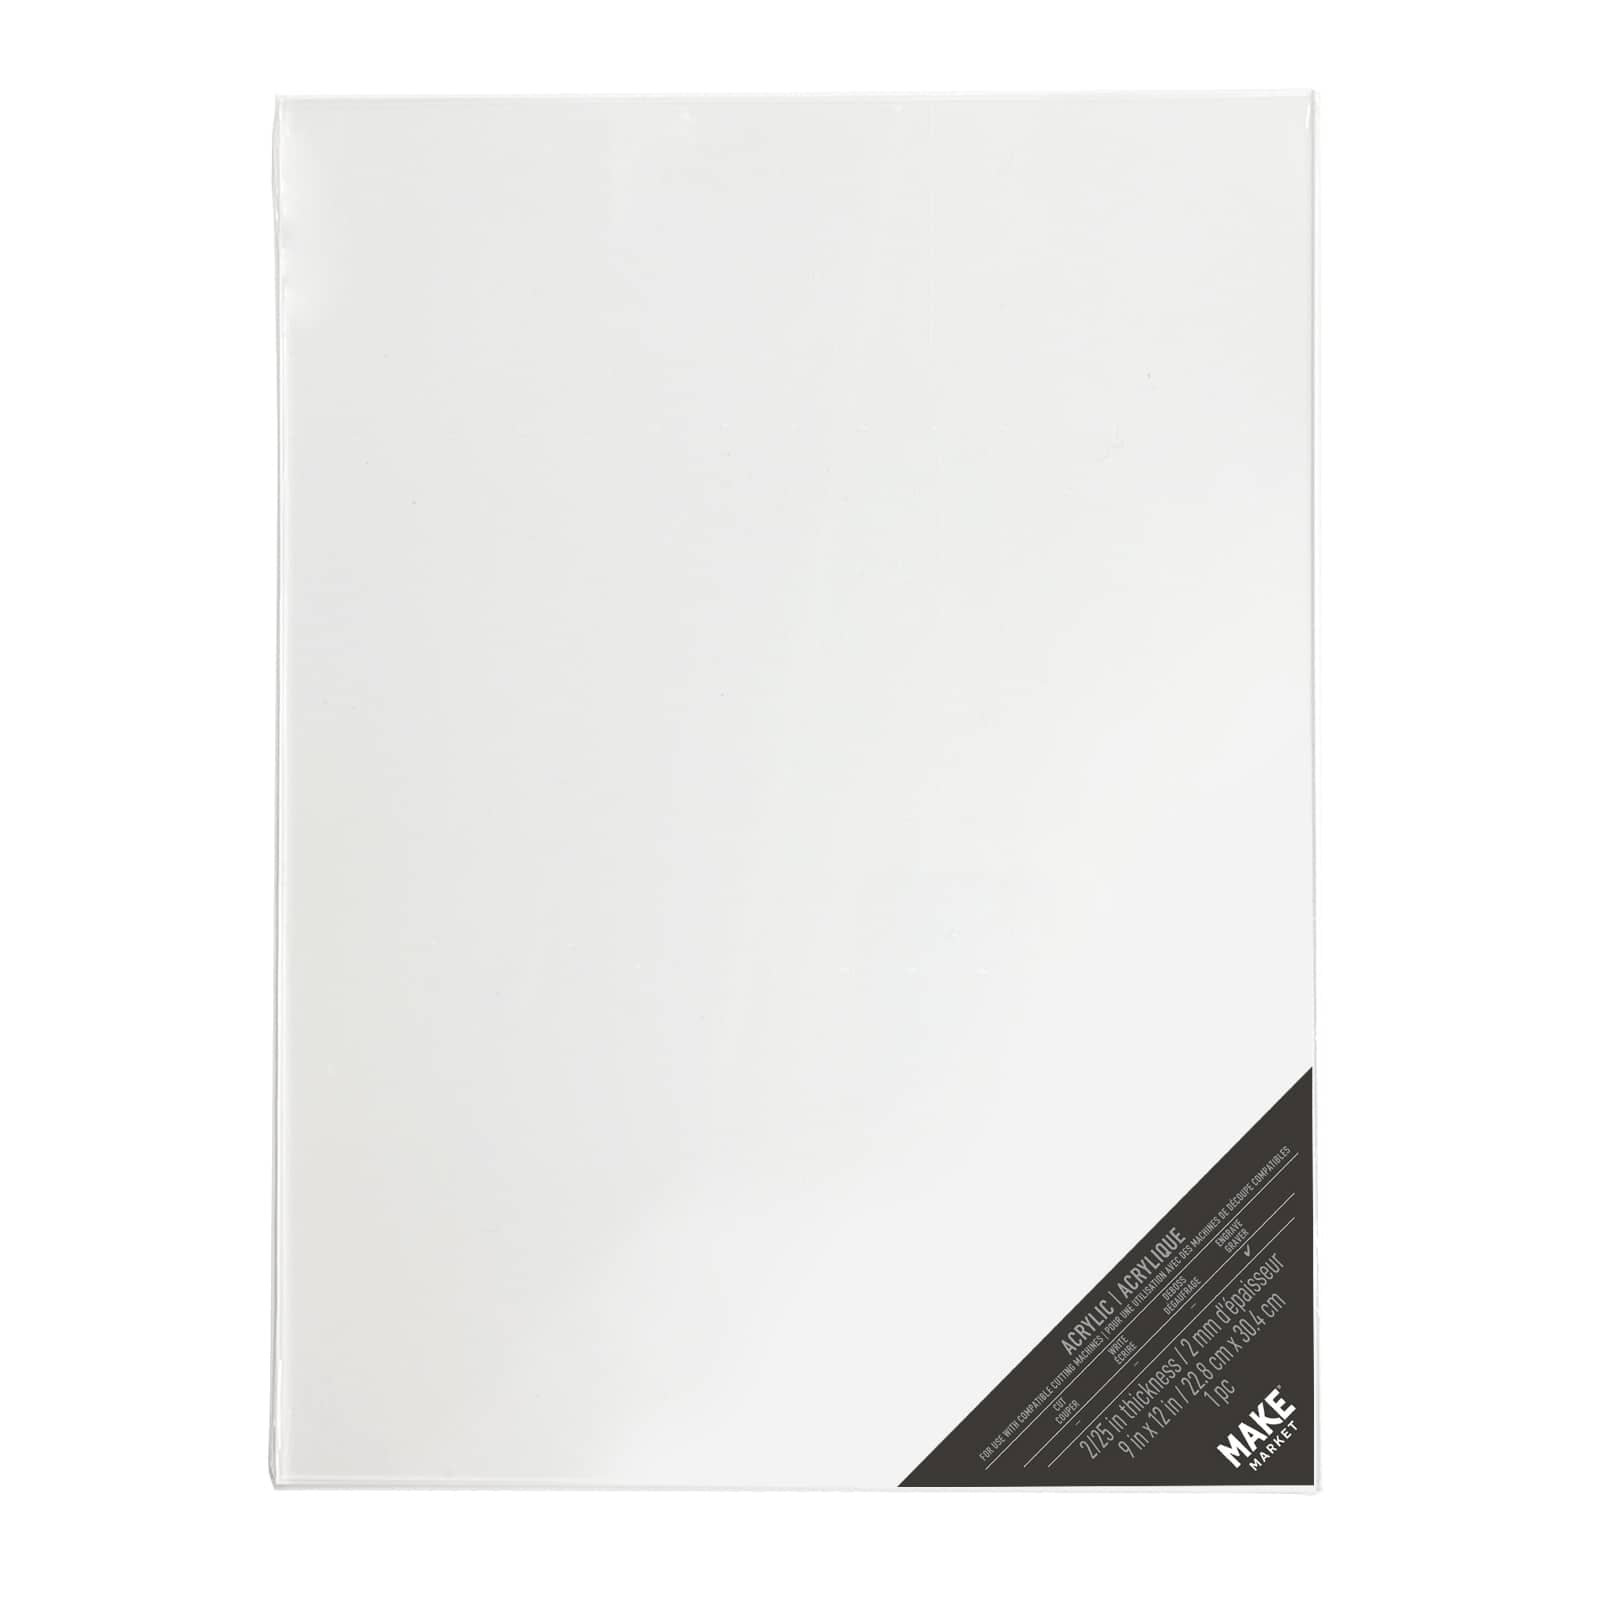 Wholesale Craft Blanks Sublimation Acrylic Sheets White 12 x 12 24 S